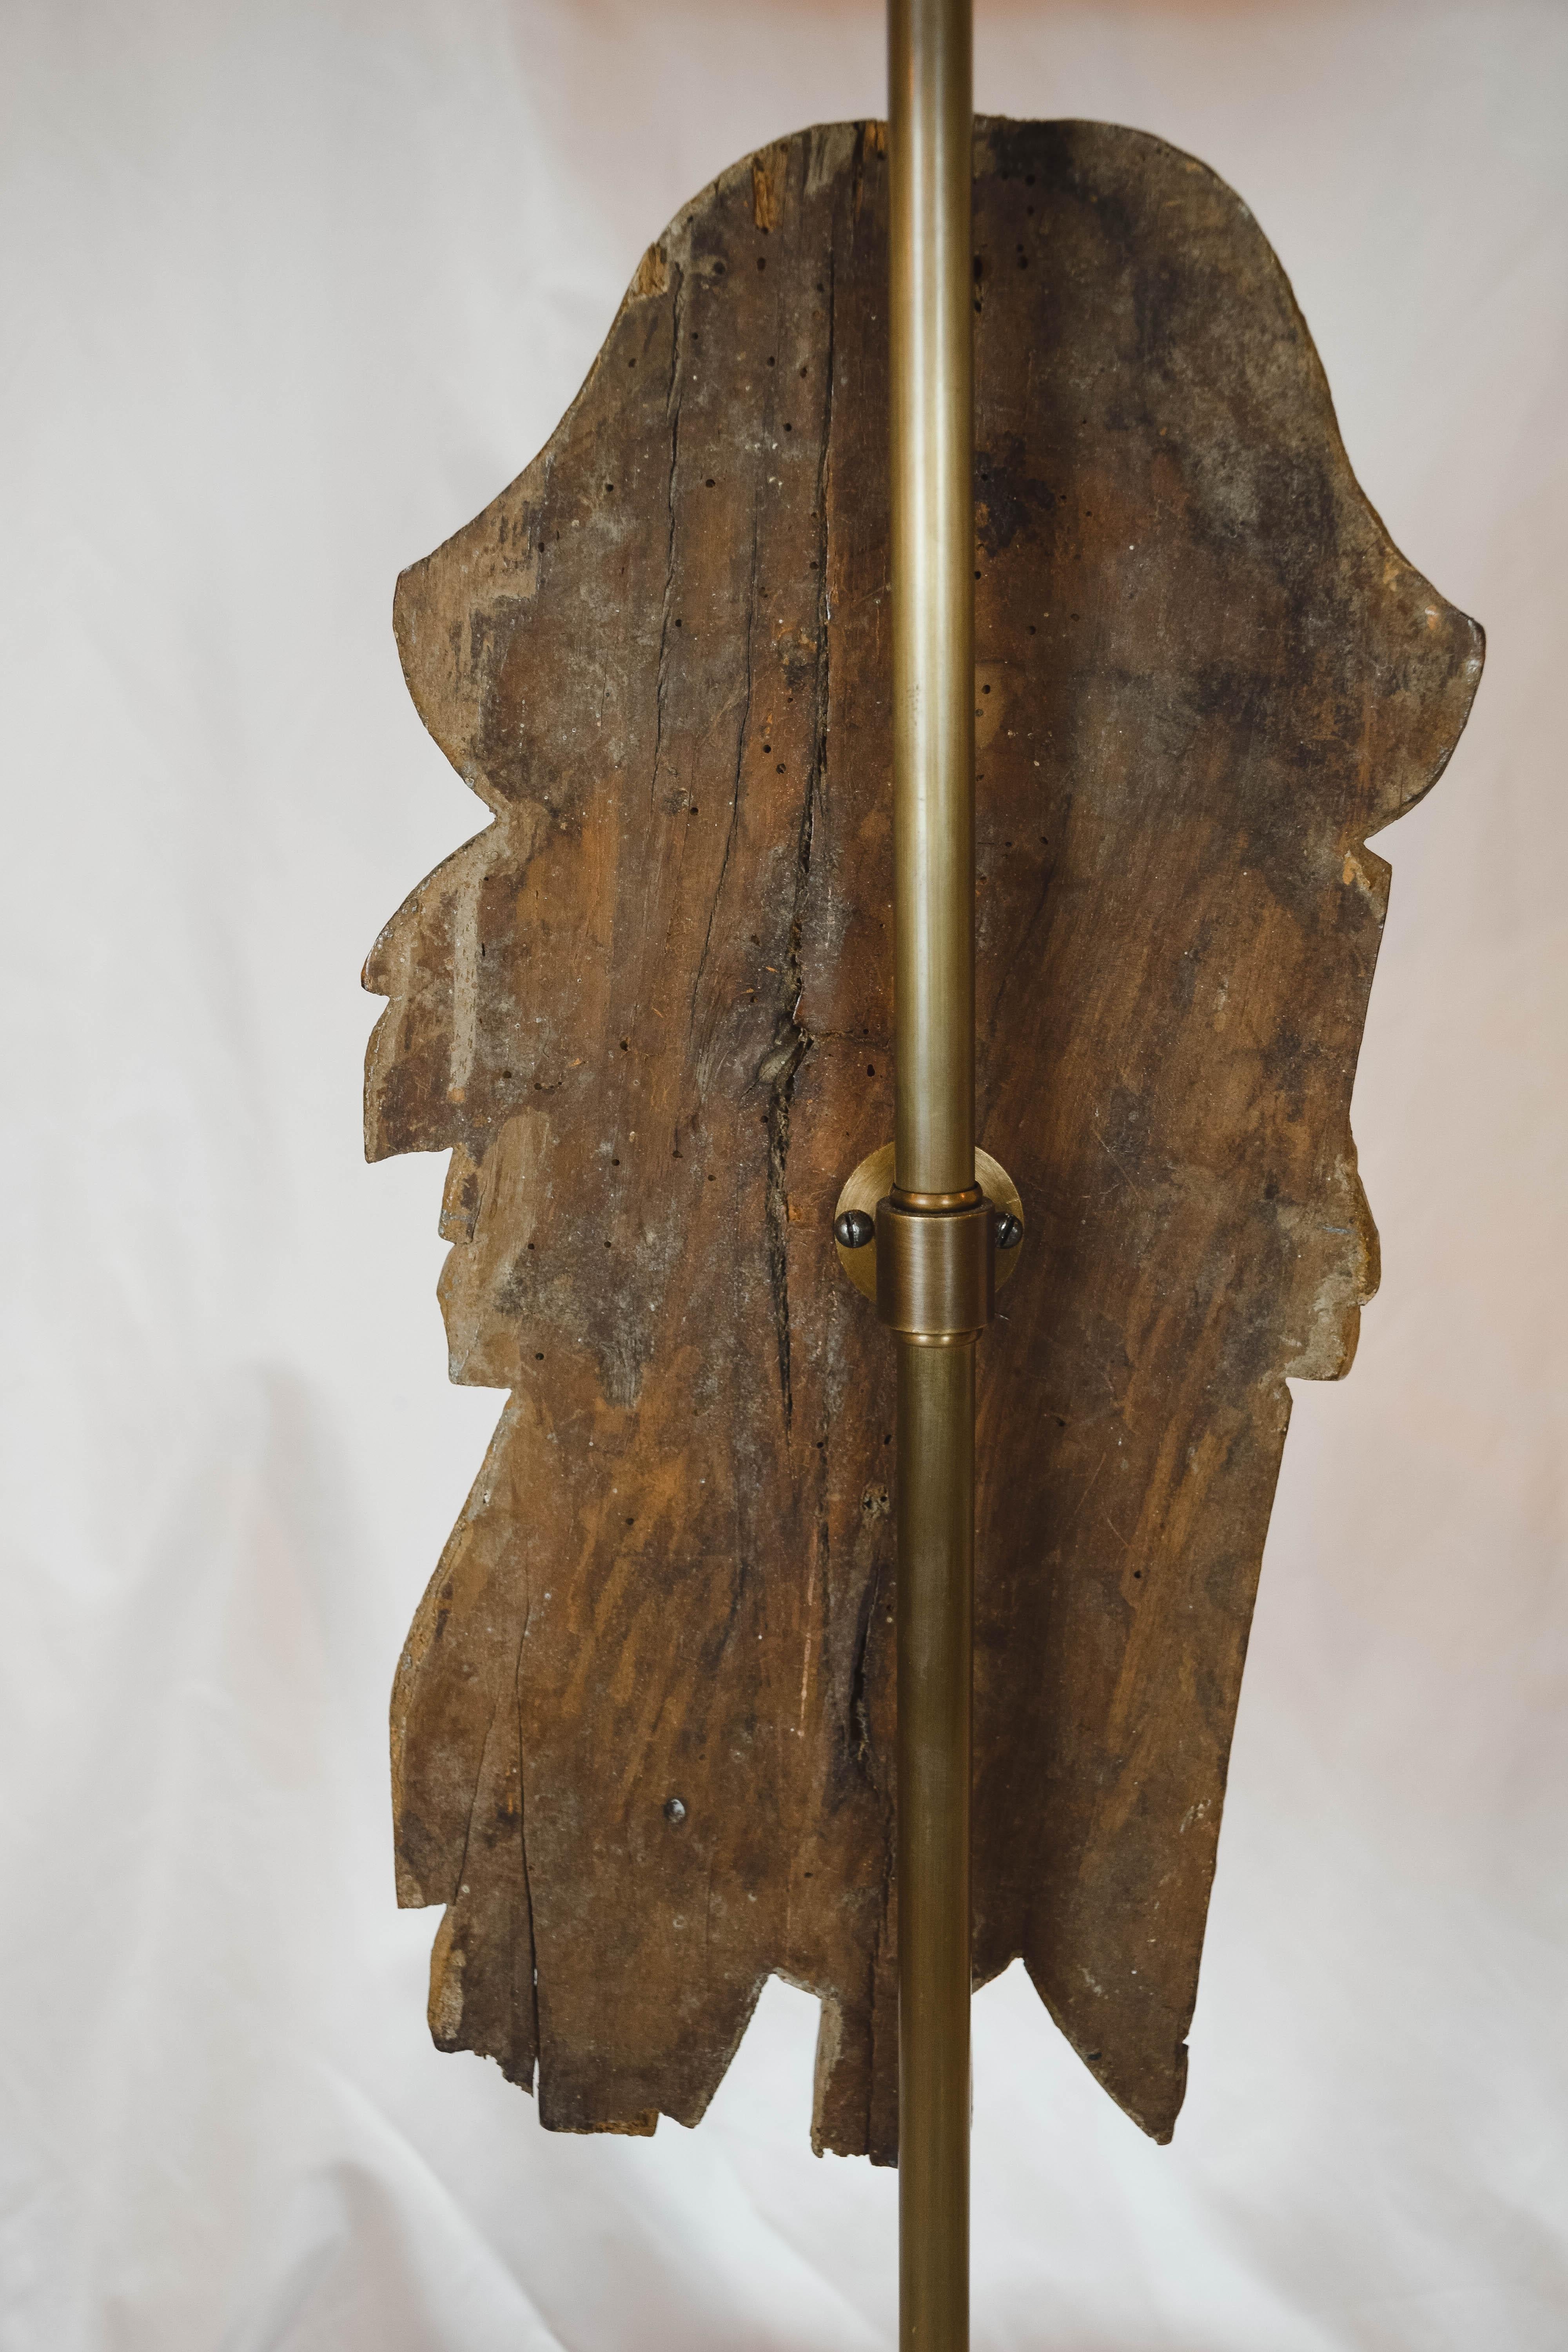 Wood Lamp Designed with Antique Portuguese Architectural Element